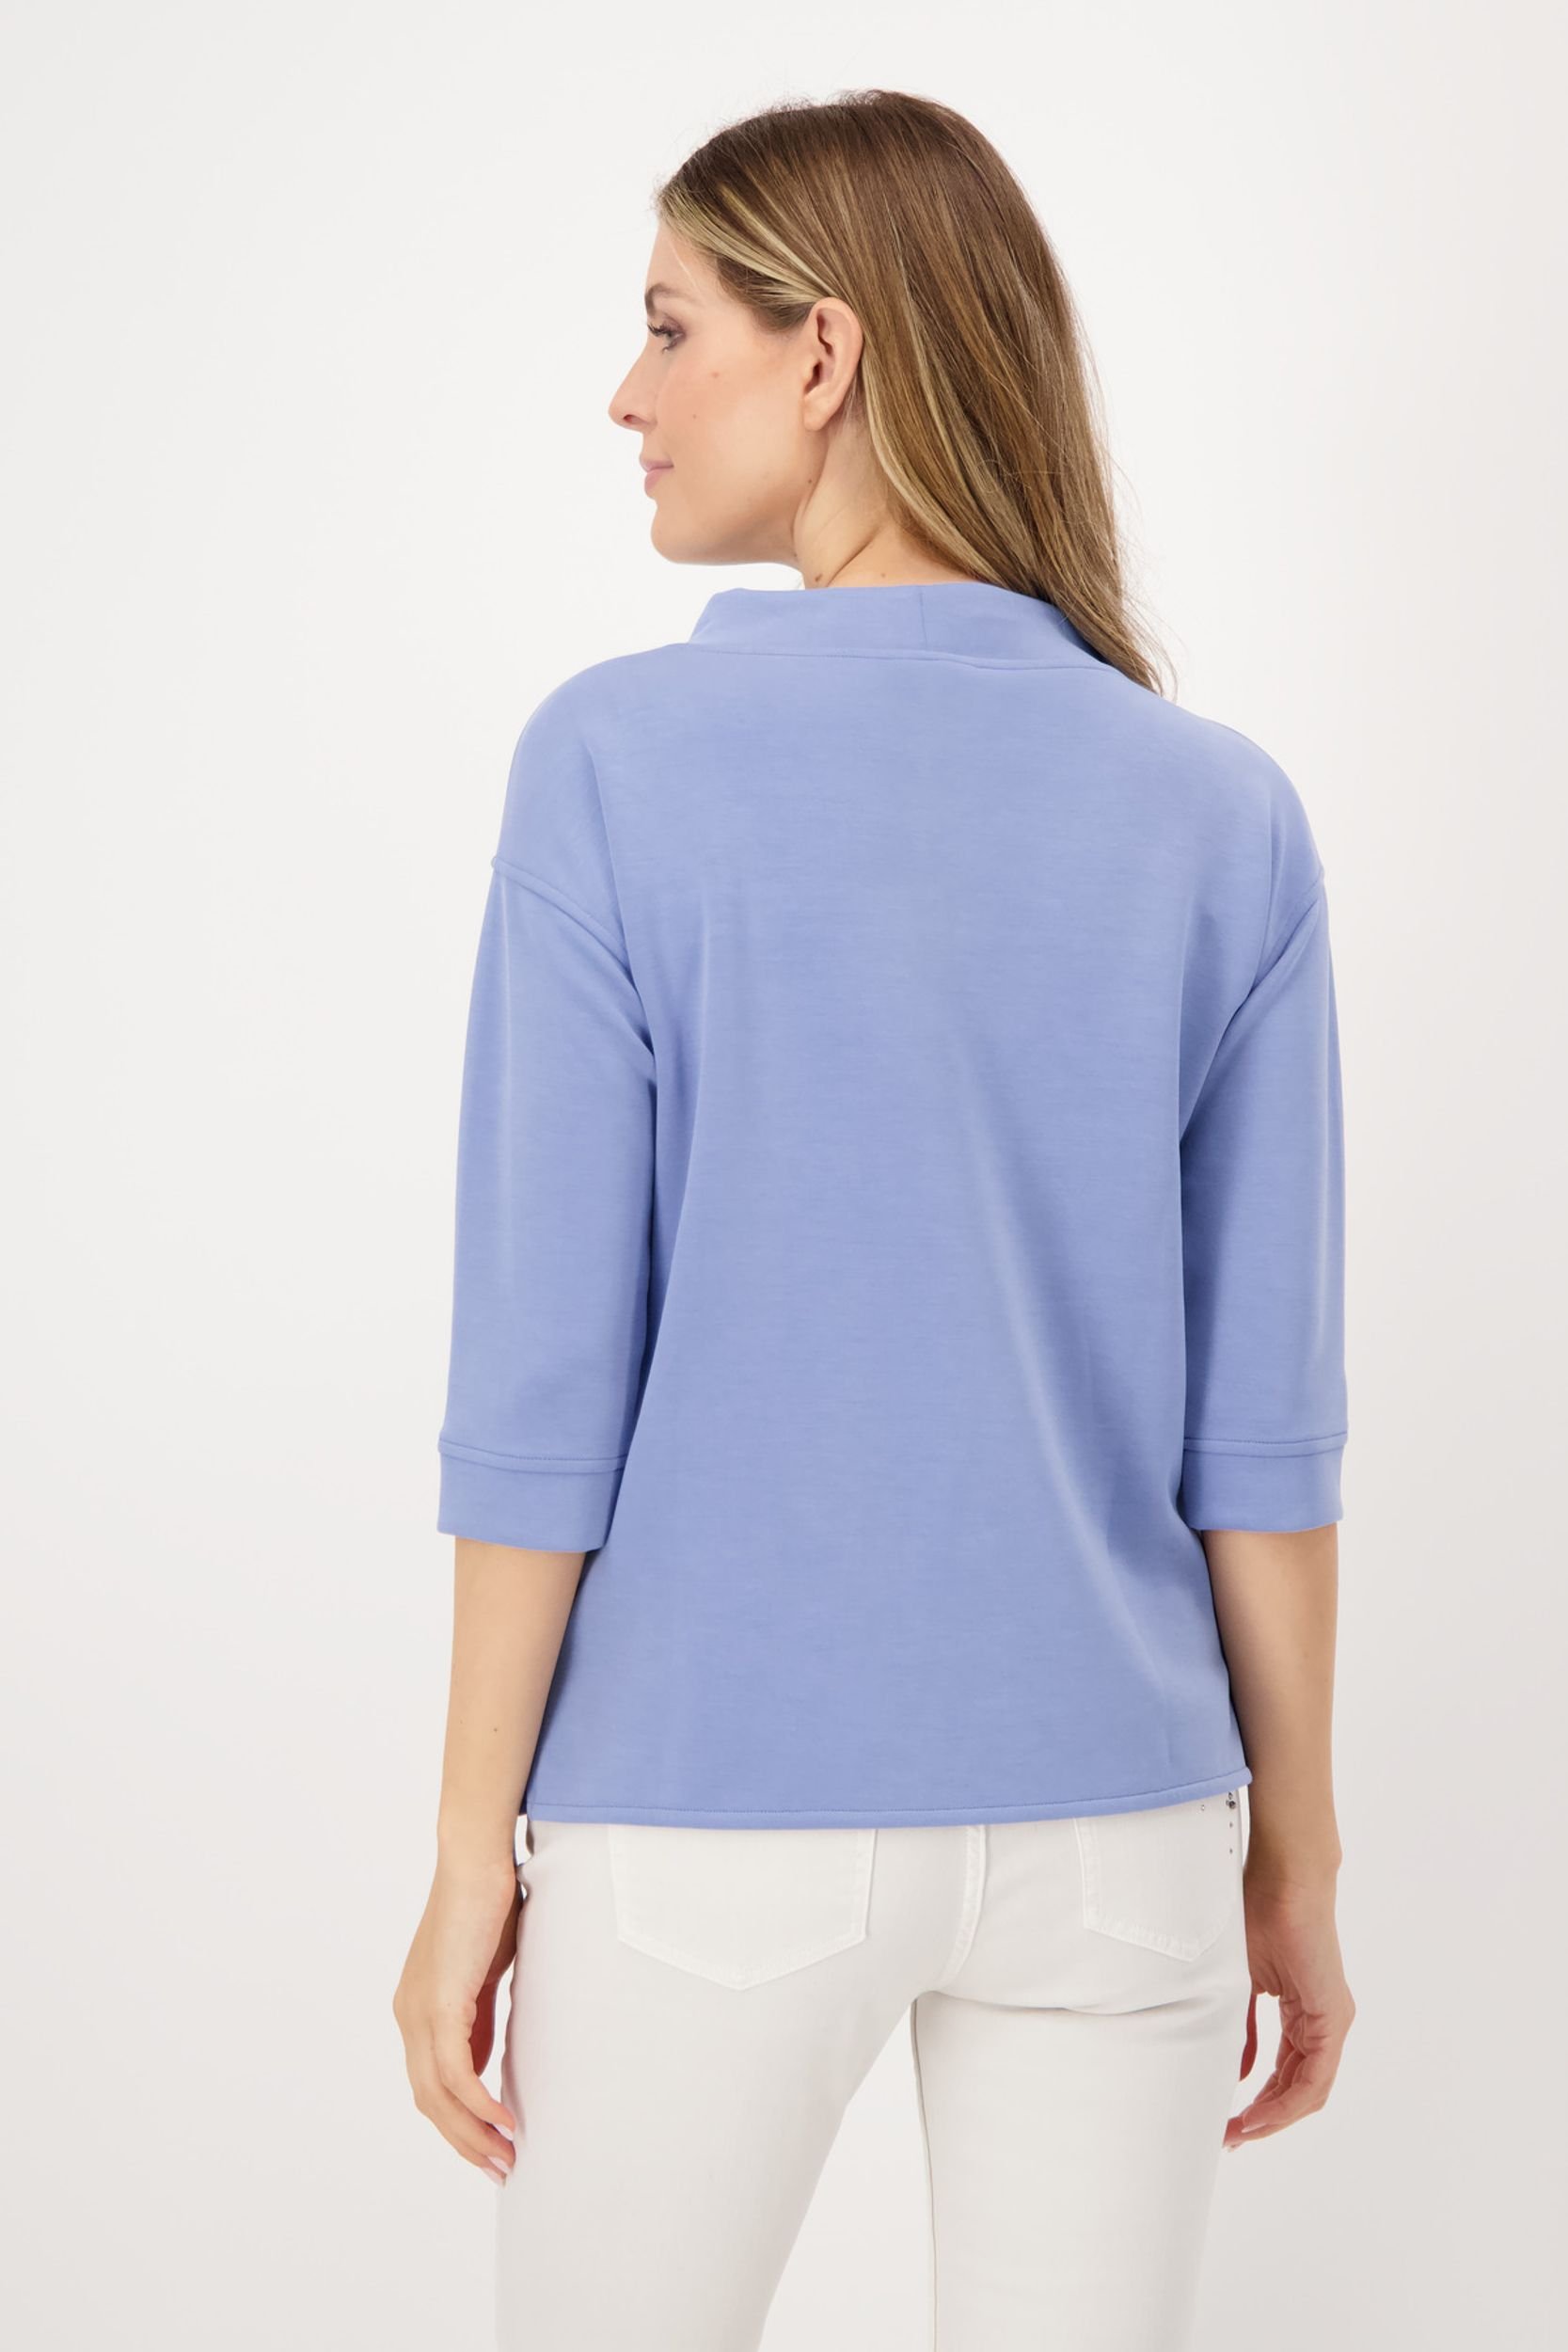 Sweatshirt, aqua blue